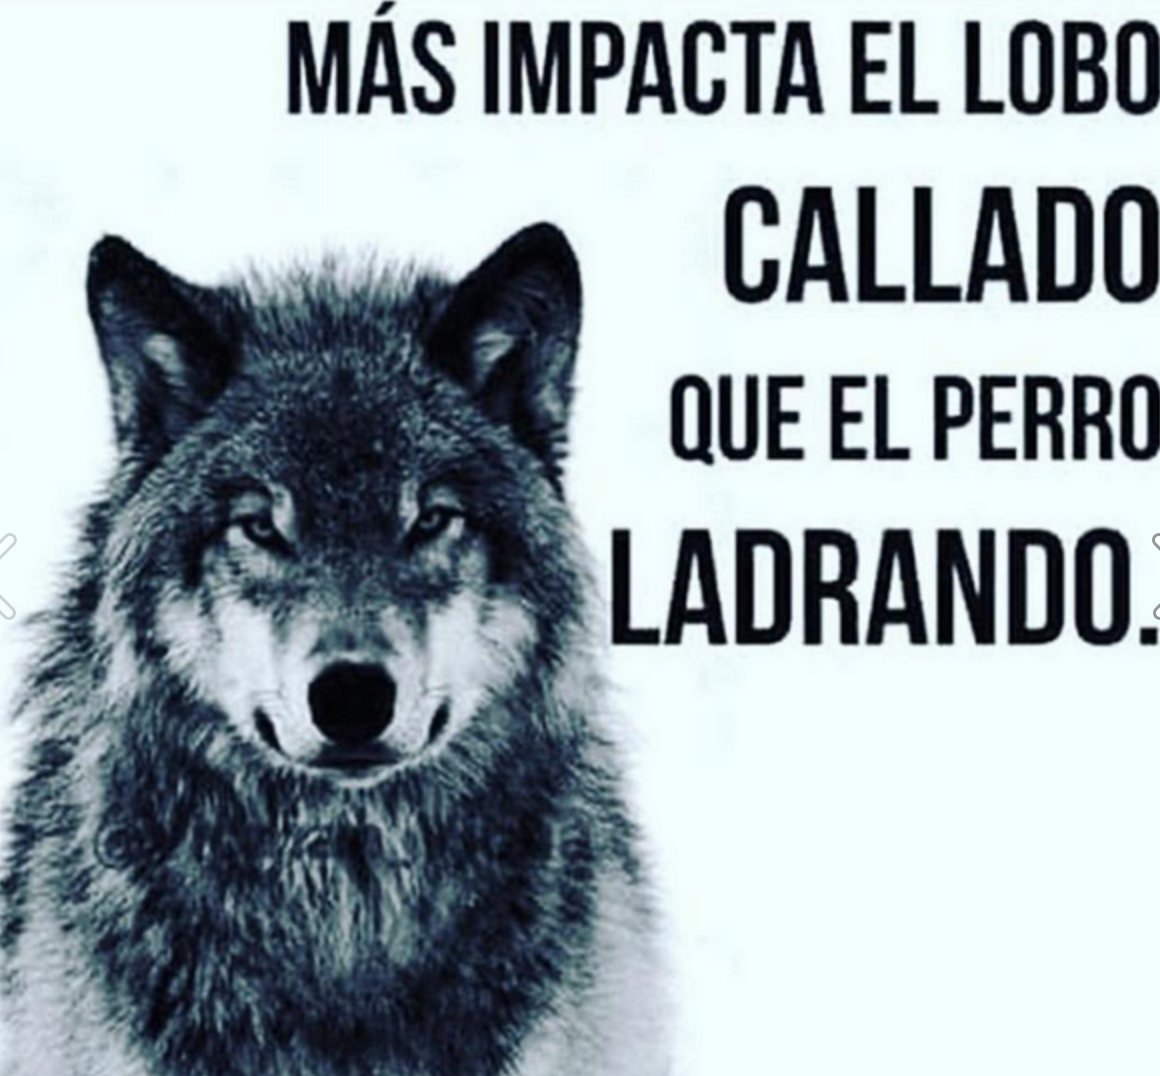 305 Media Solutions Twitterissa Mas Impacta El Lobo Callado Que